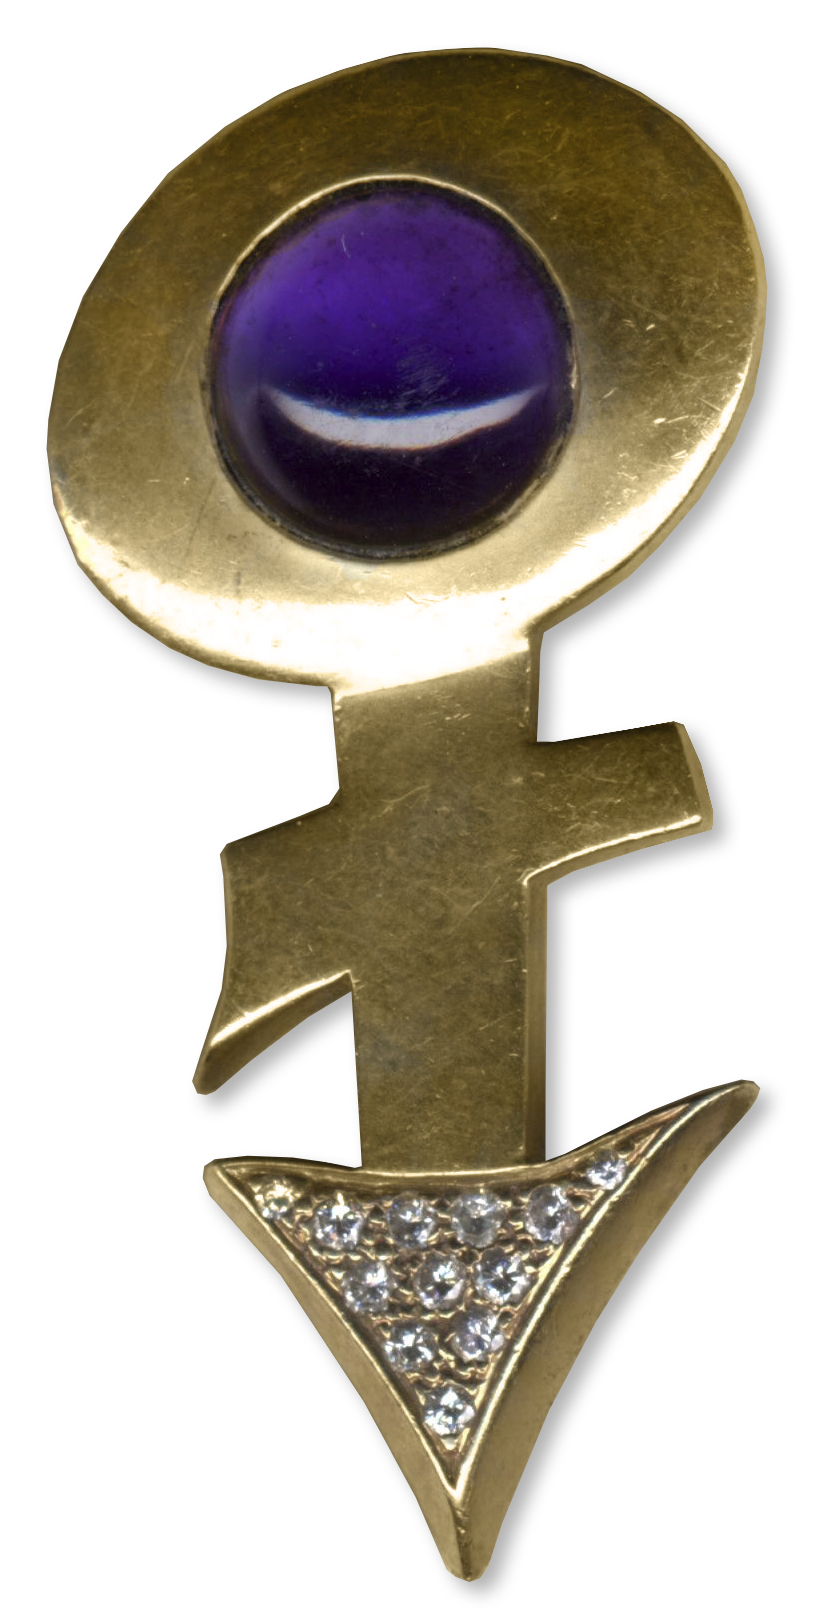 Prince Memorabilia Auction Prince Worn Diamond & Amethyst Pin -- In the Shape of His Love Symbol